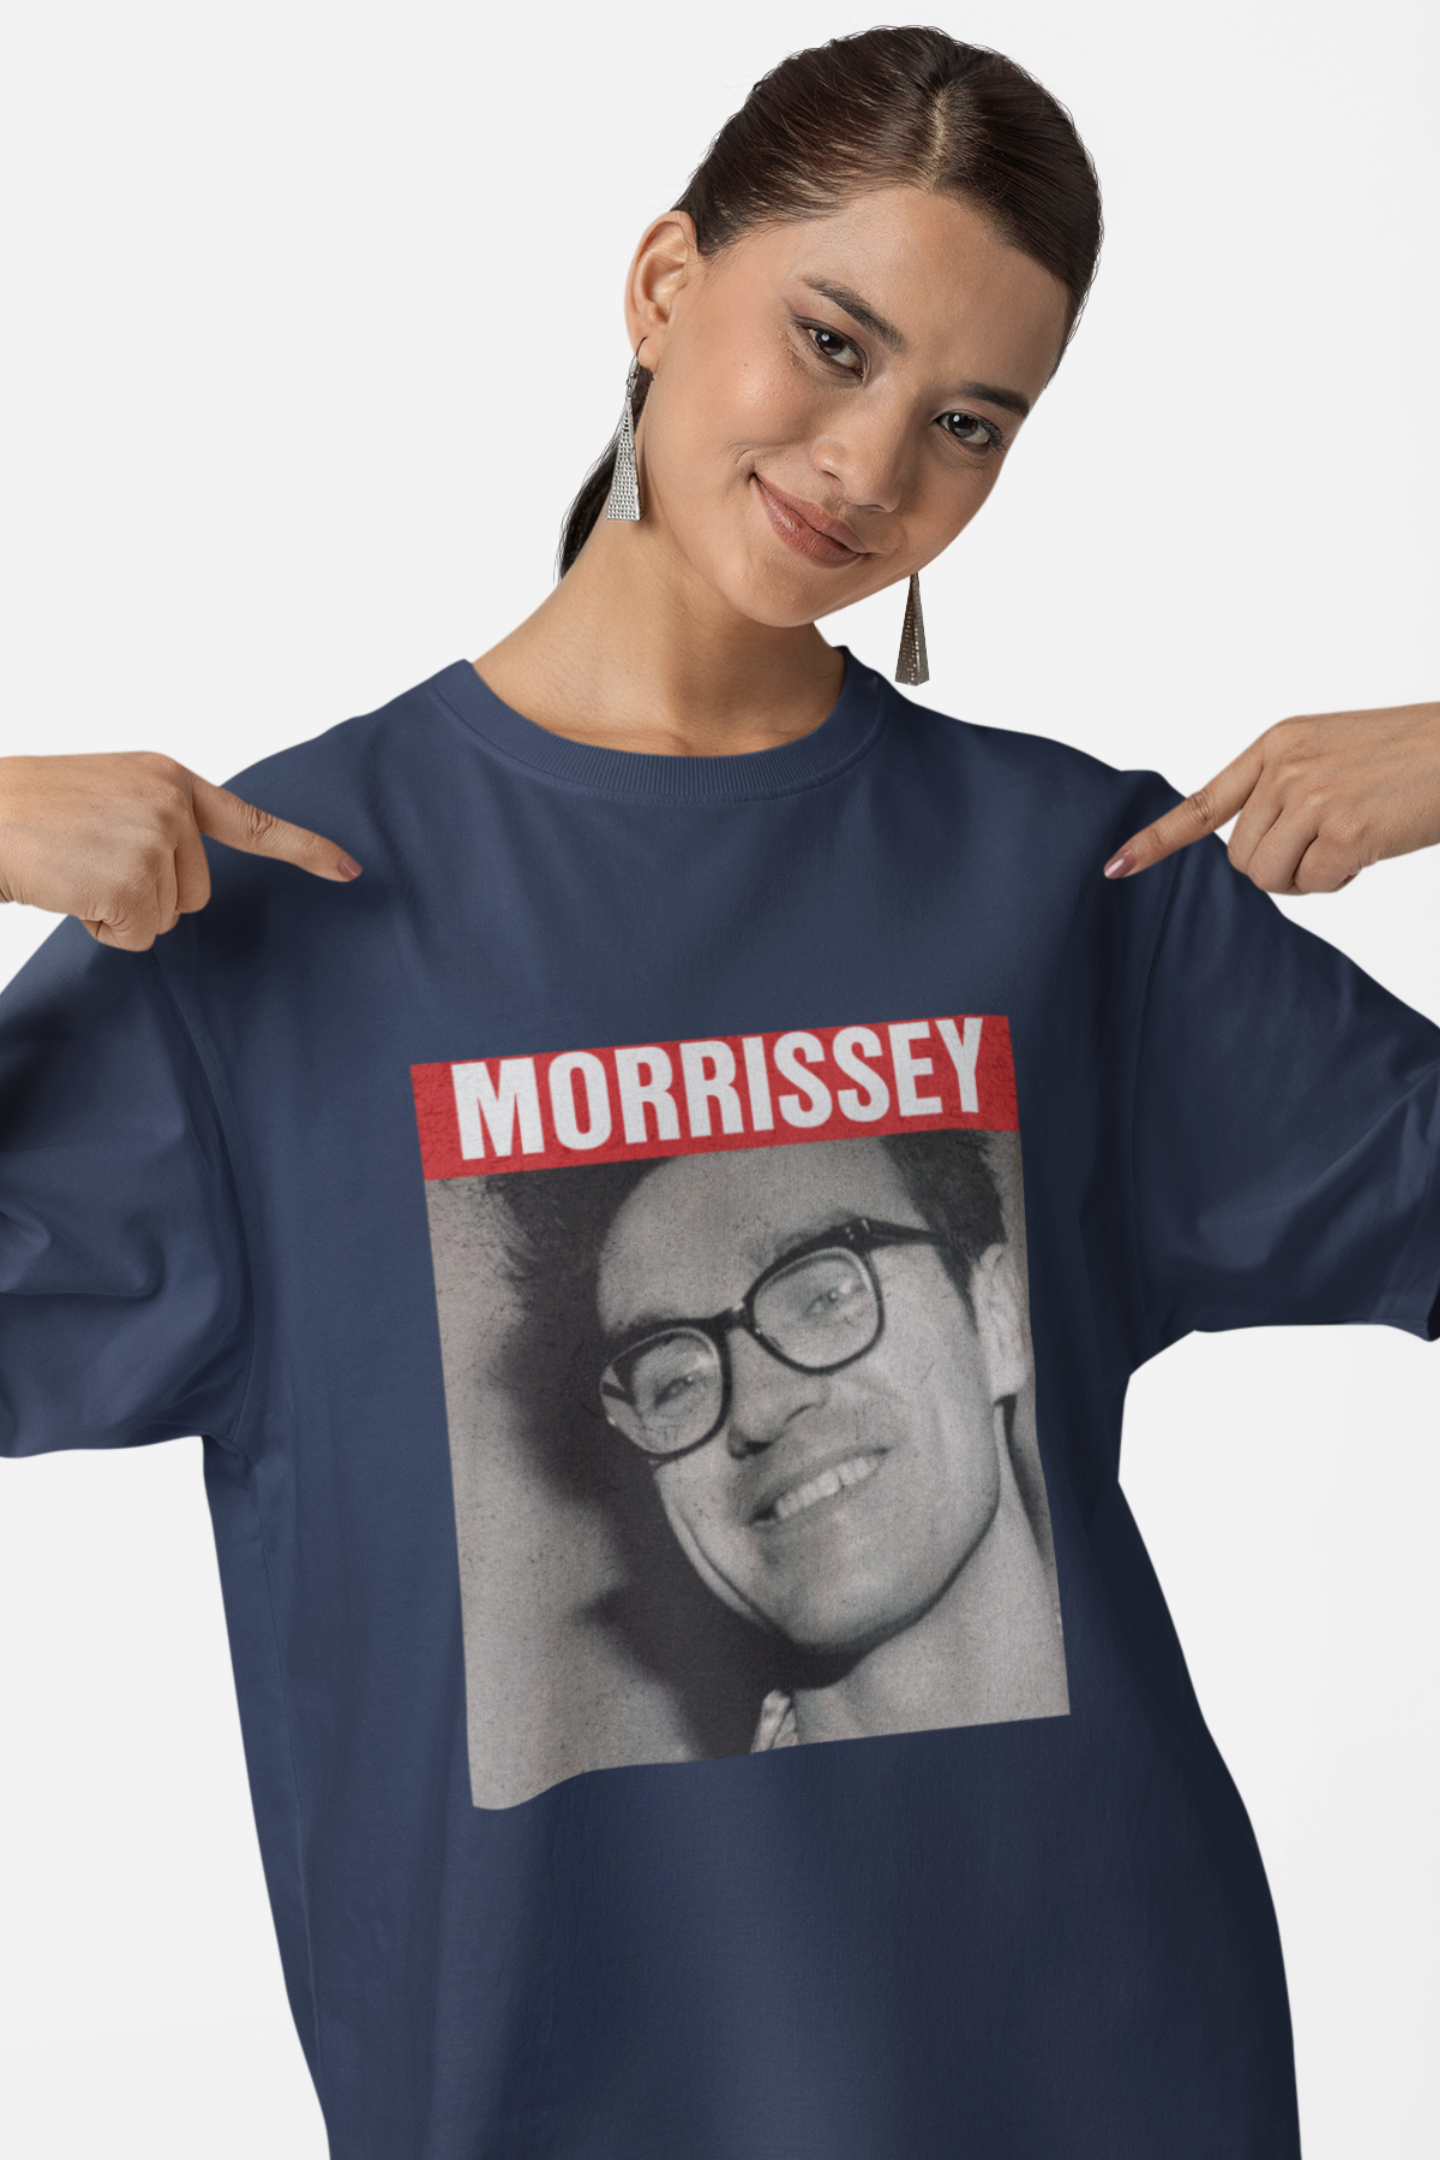 Morrissey Homage T Shirt | The Smiths Morrissey T Shirt | The Smiths Gift | Rock and Roll | Morrissey T Shirt